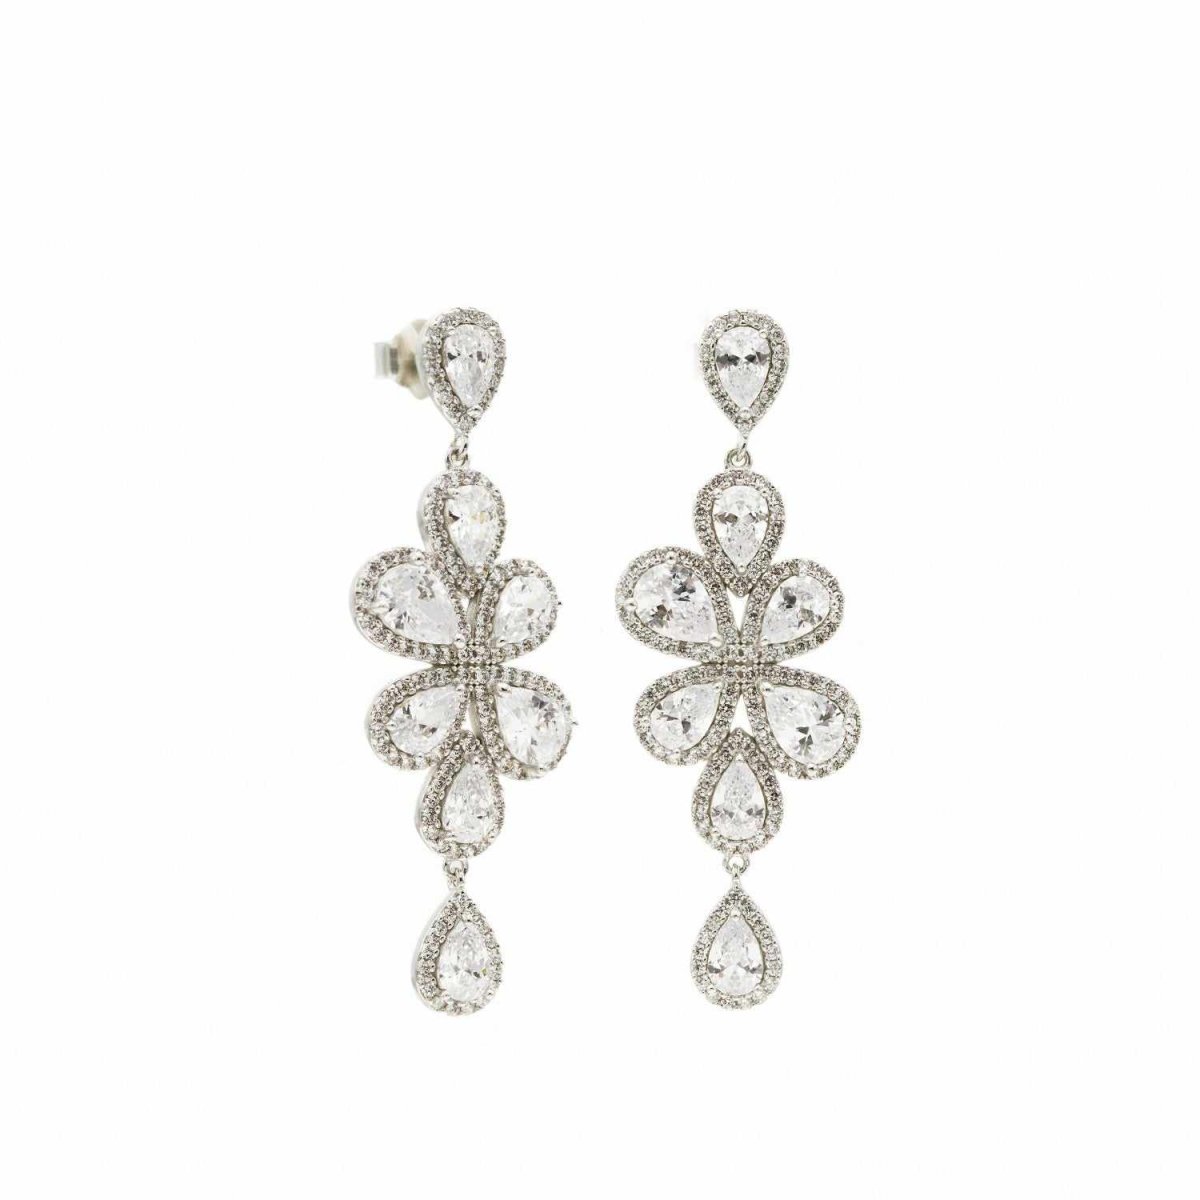 Earrings - Earrings bride silver and zirconia lampwork design nature